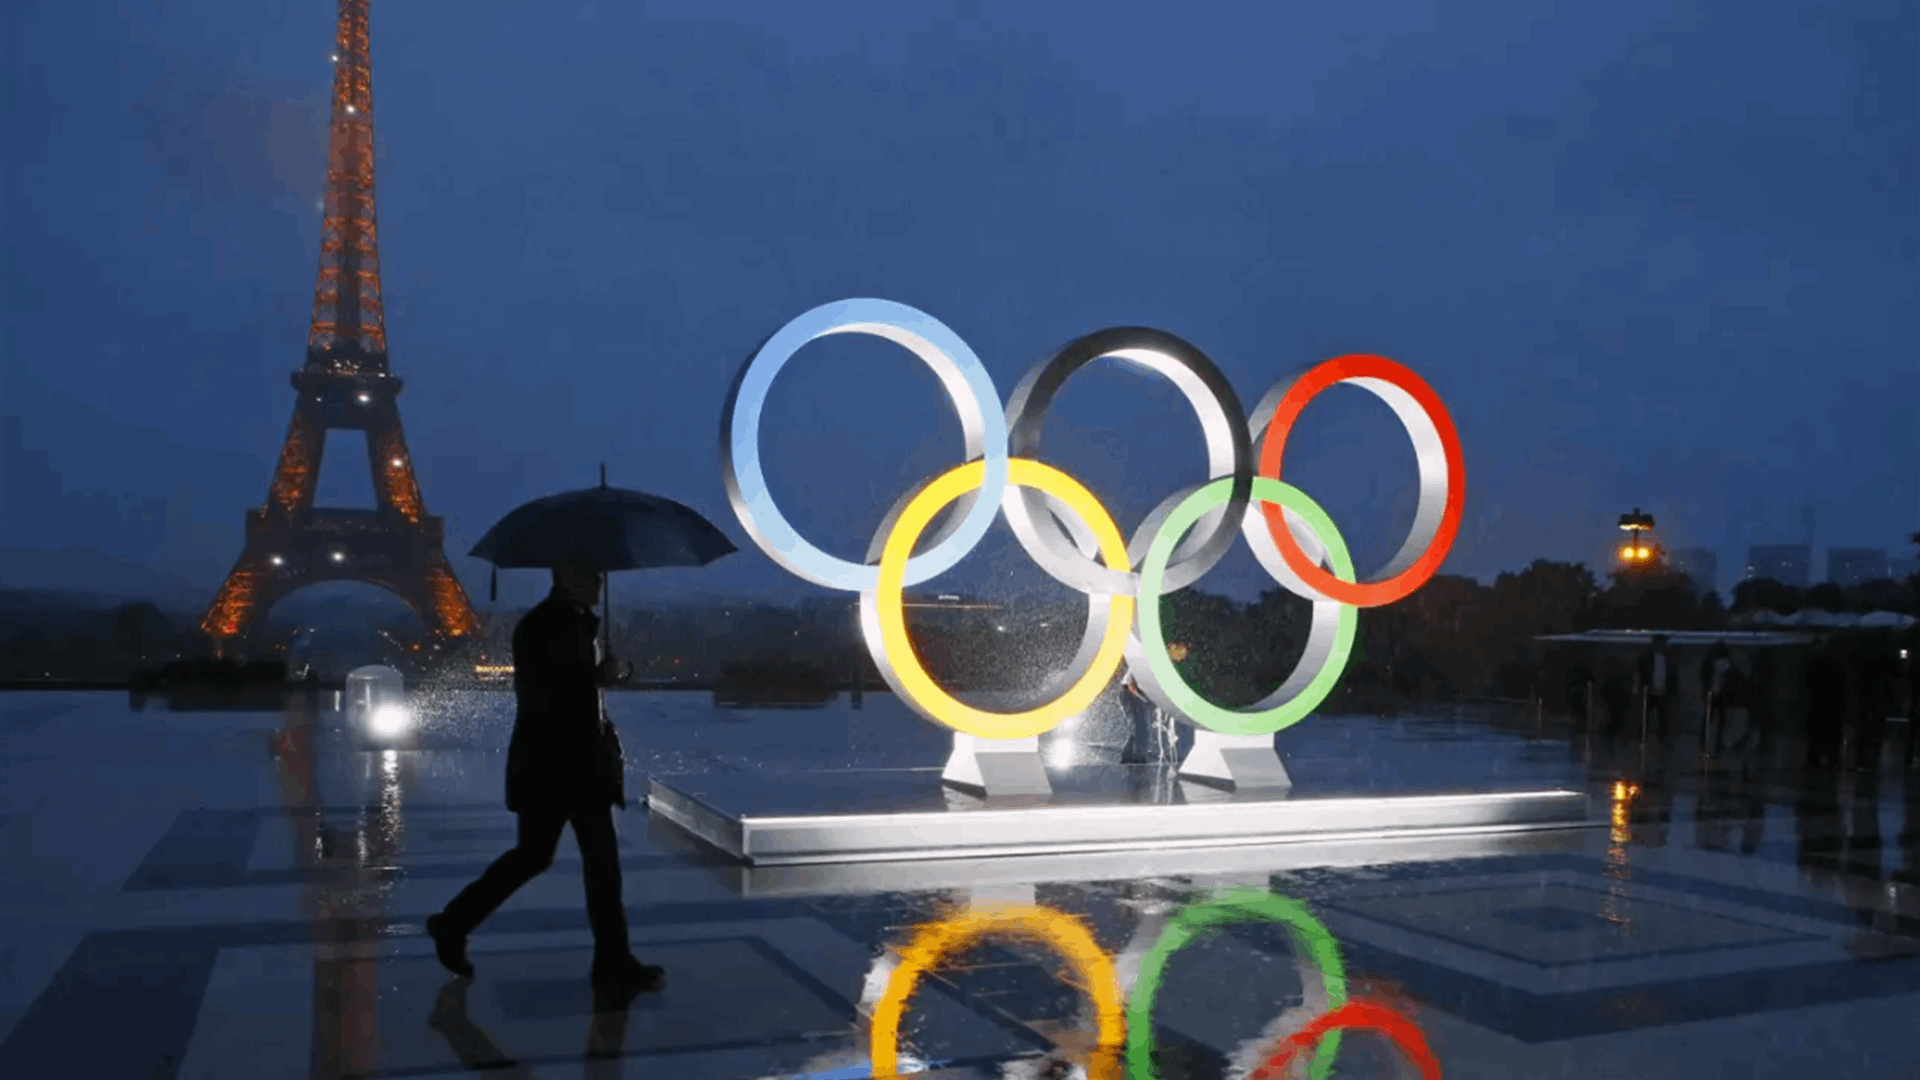 Paris 2024 Olympics faces challenges amid social concerns, Russian participation, and legal threats